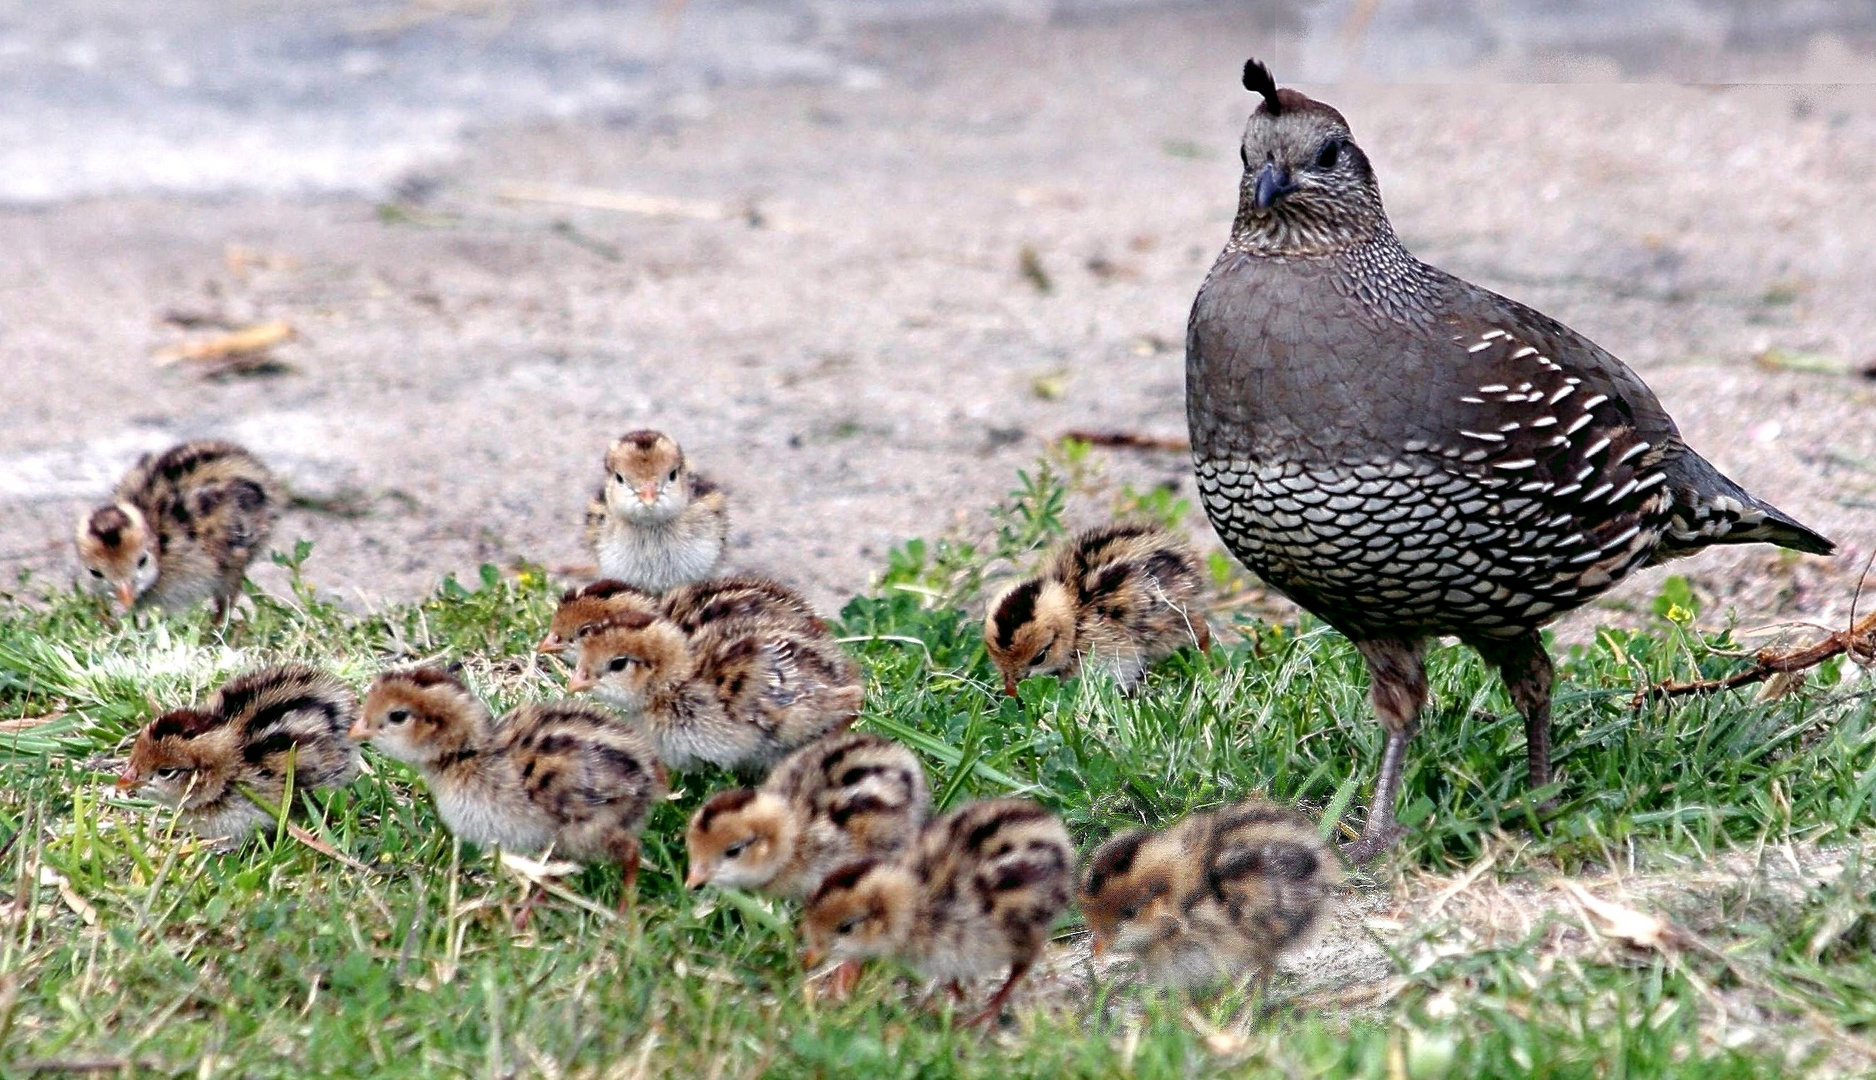 The family . California quail!